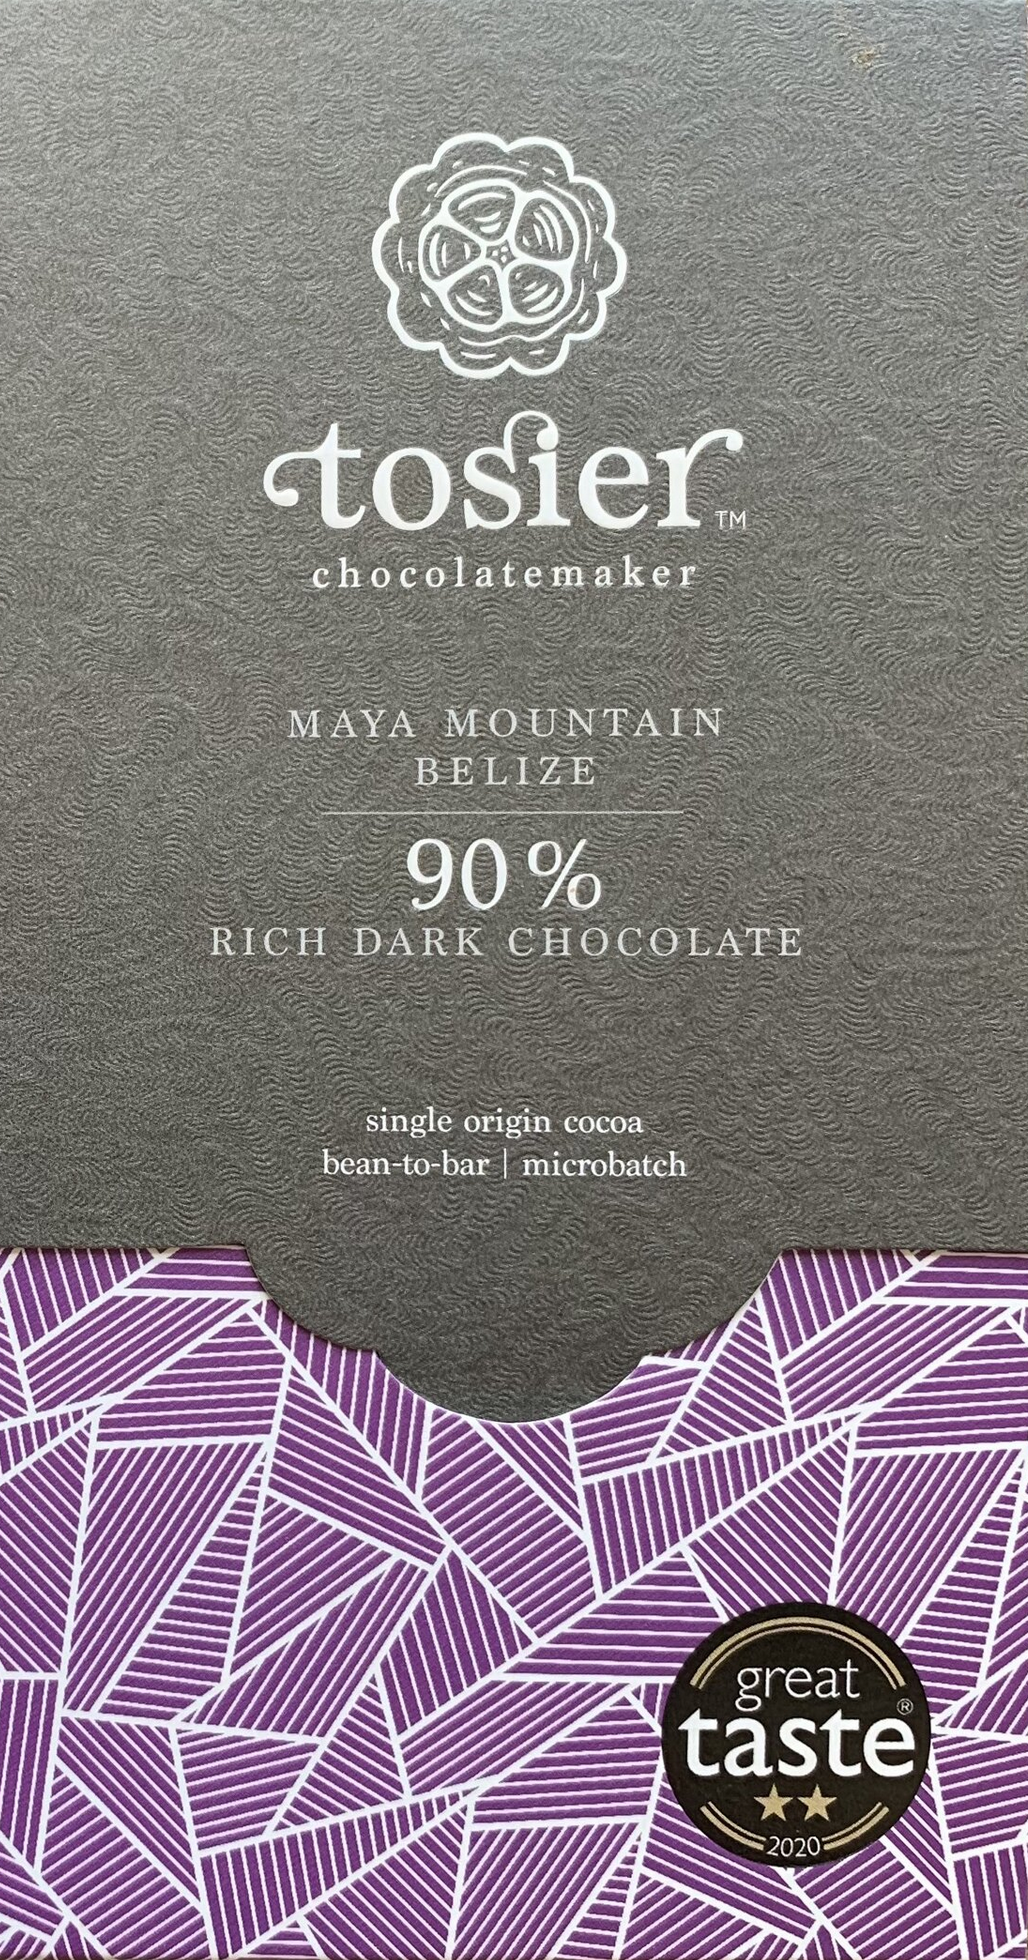 TOSIER | Dunkle Schokolade »Maya Mountain Belize« 90% | 60g